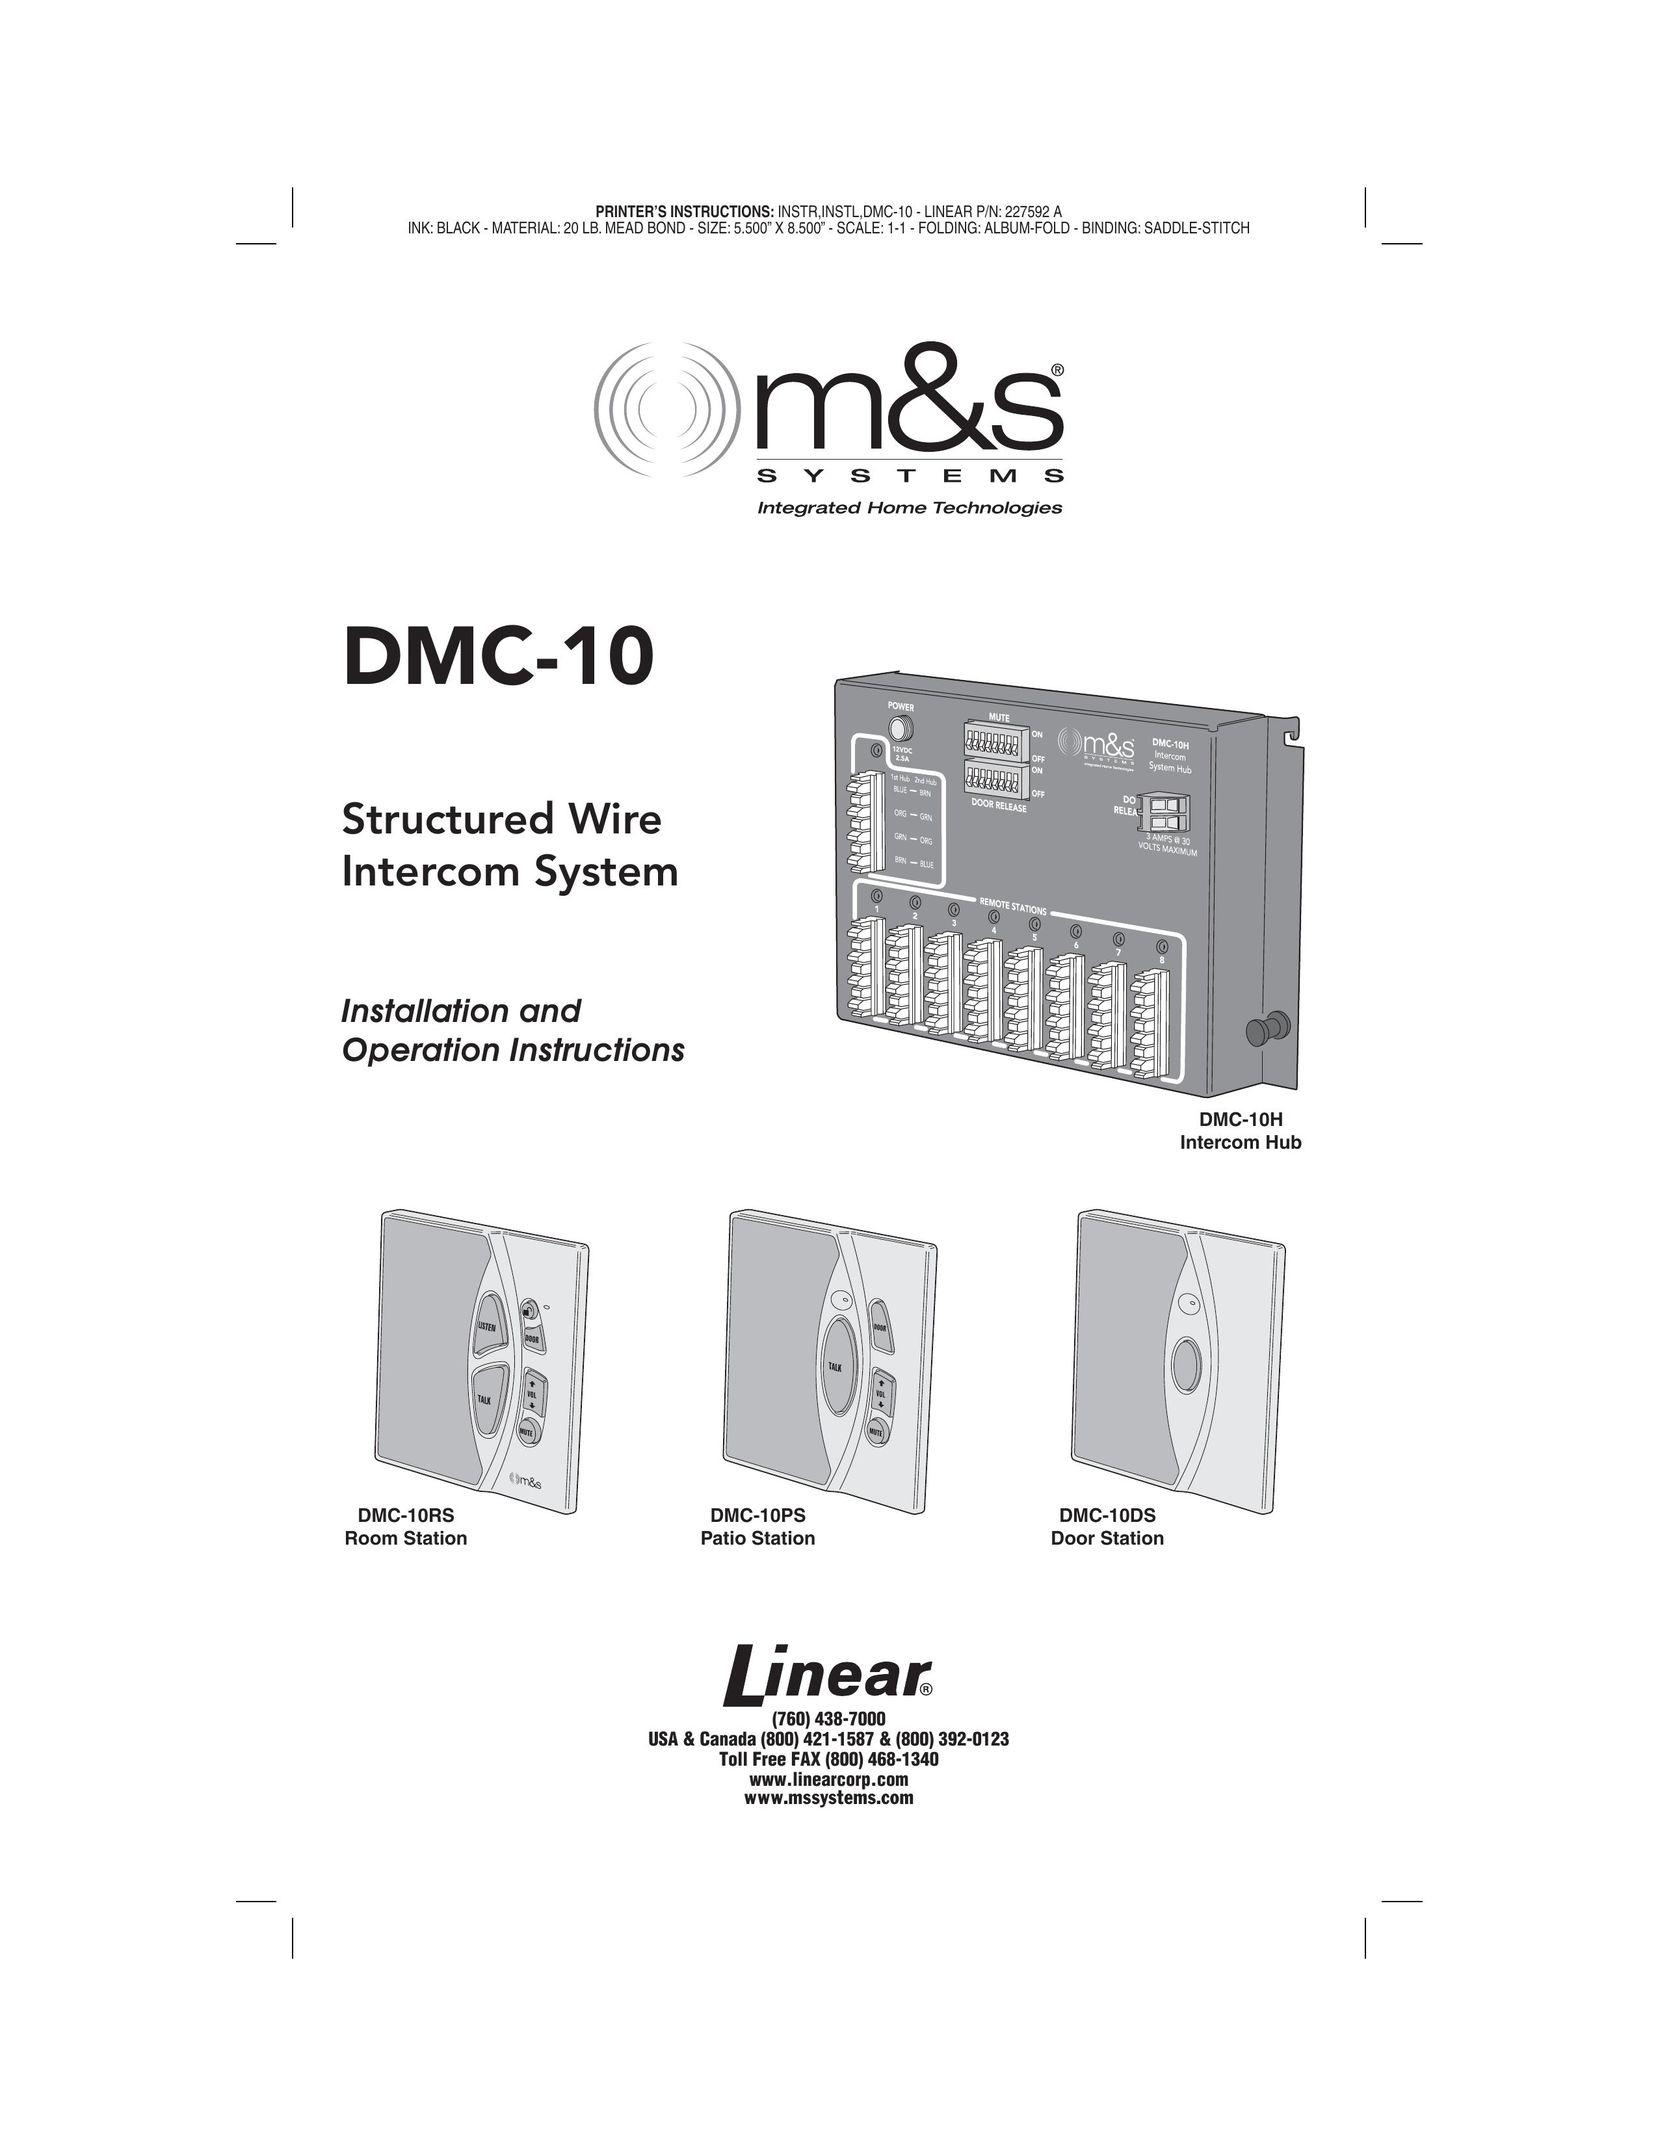 Linear DMC-10DS Intercom System User Manual